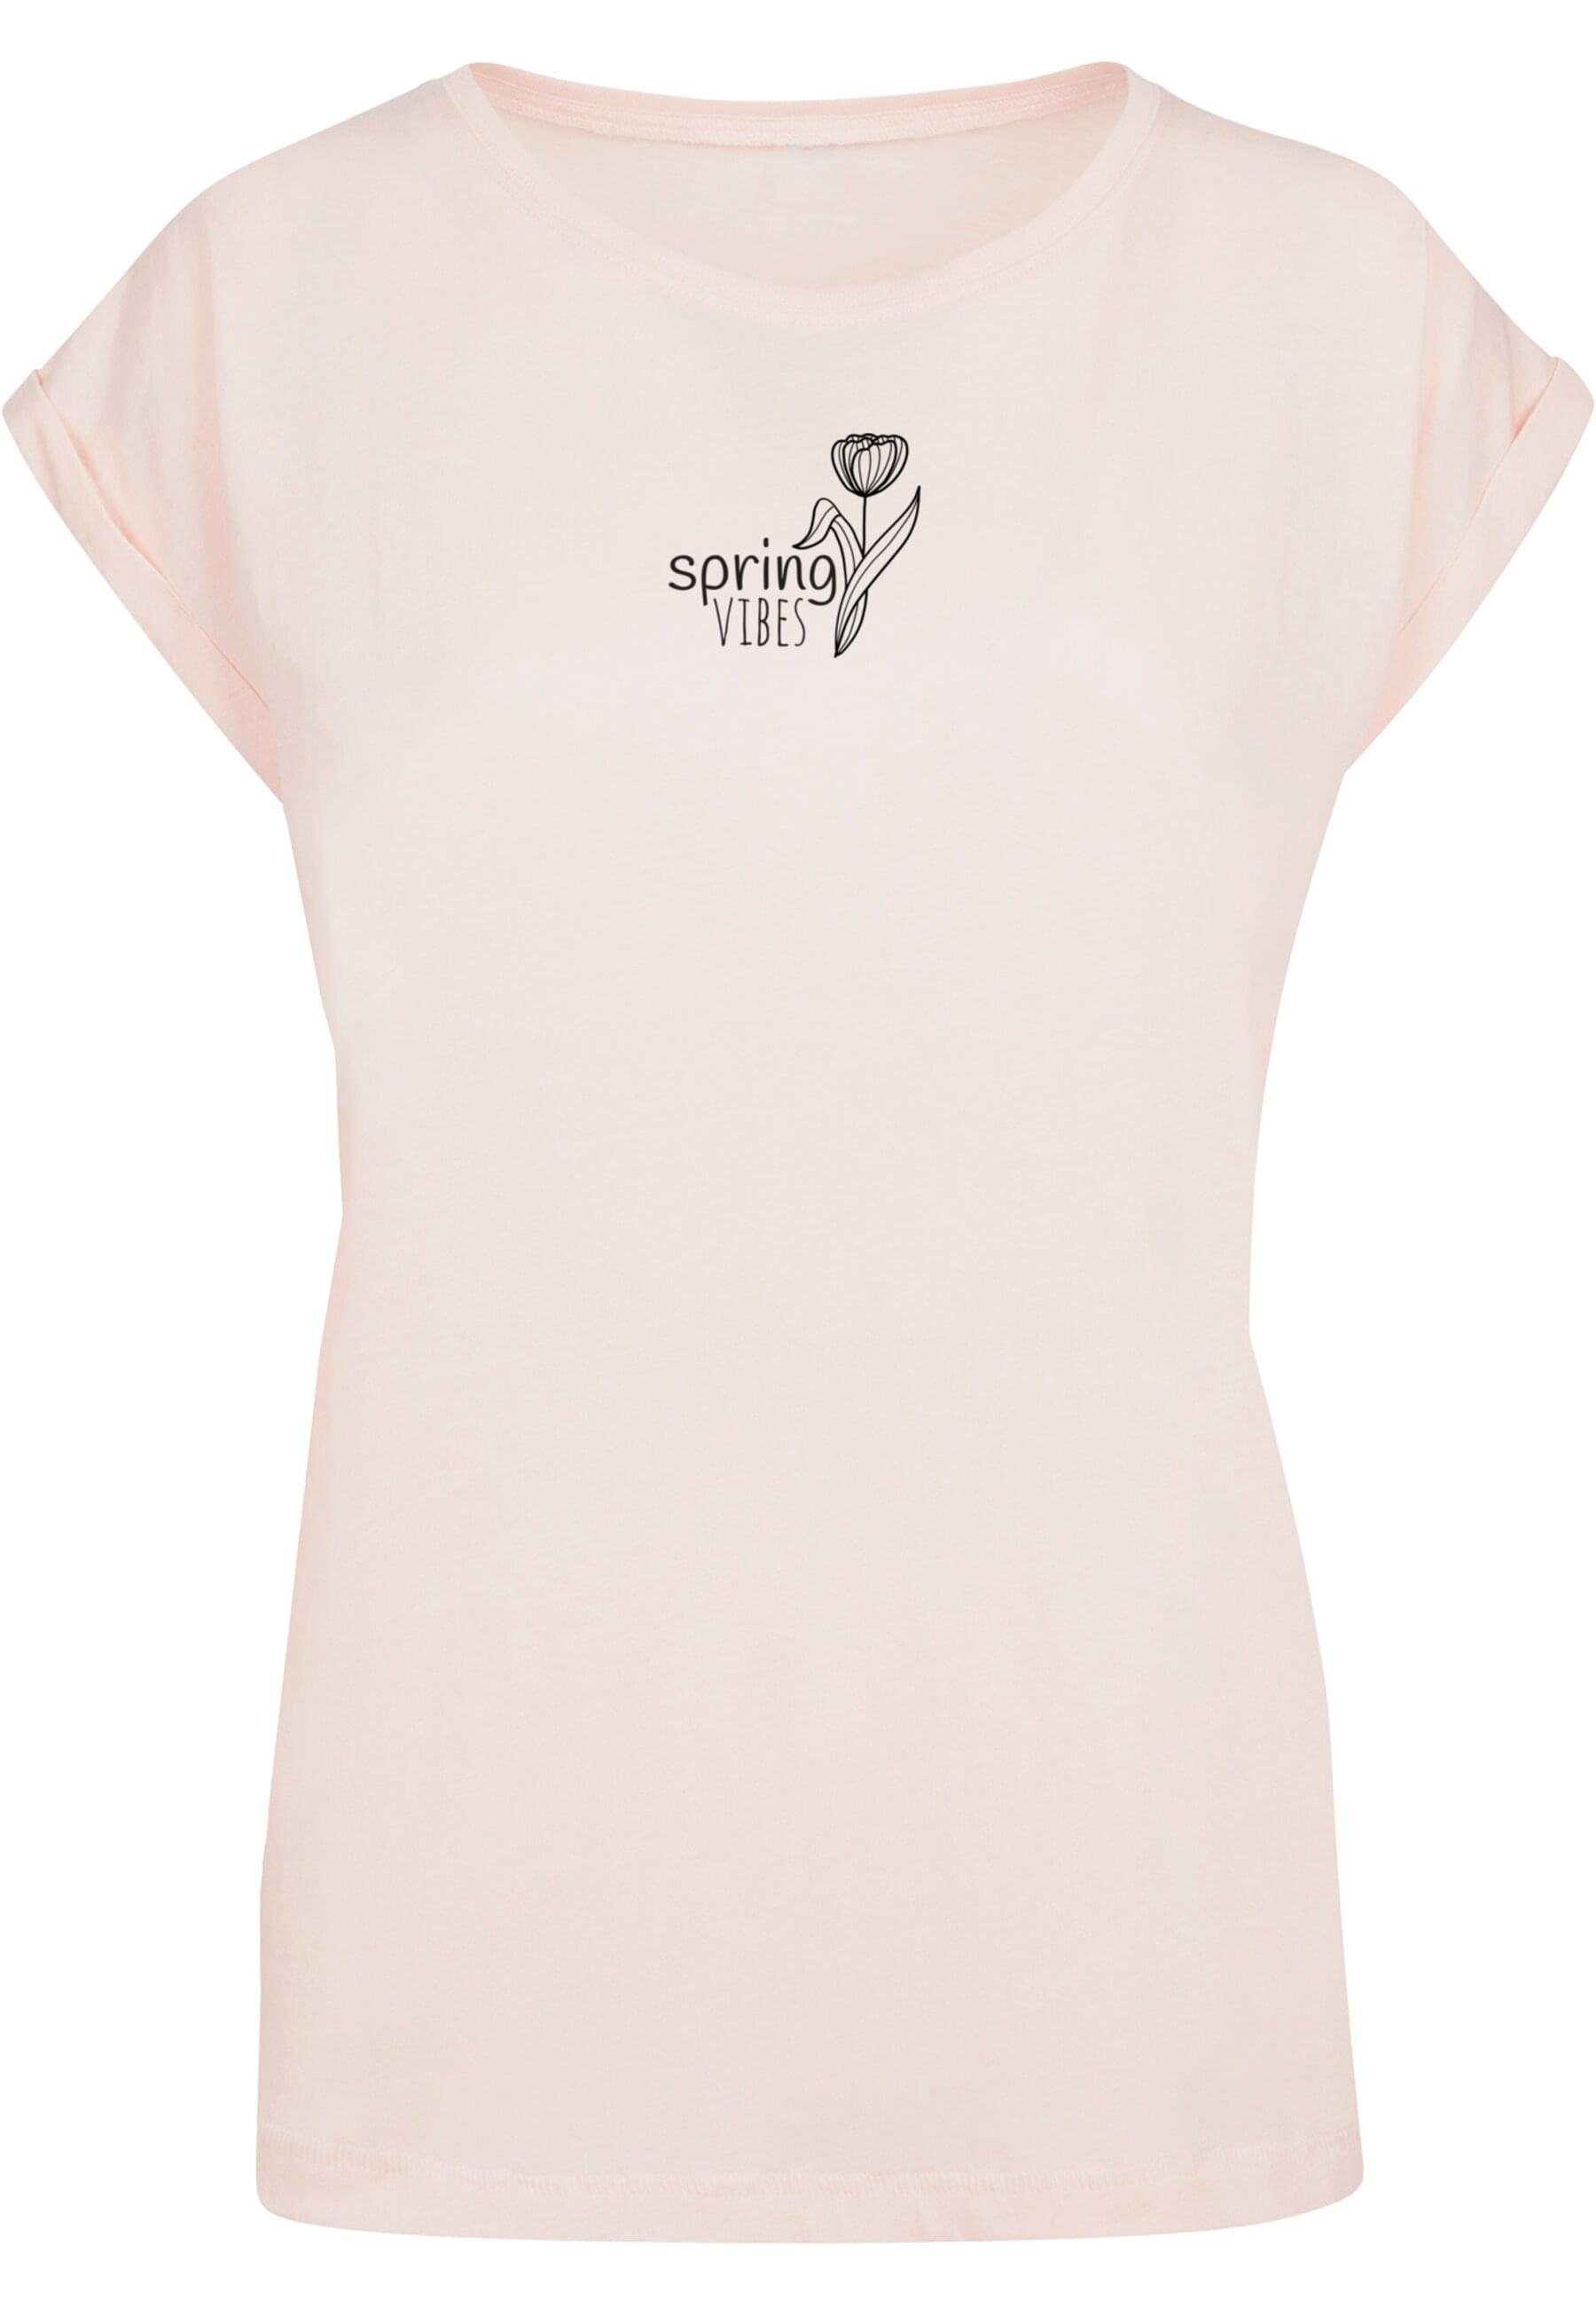 Merchcode T-Shirt Damen Ladies Spring - Vibes T-Shirt (1-tlg)